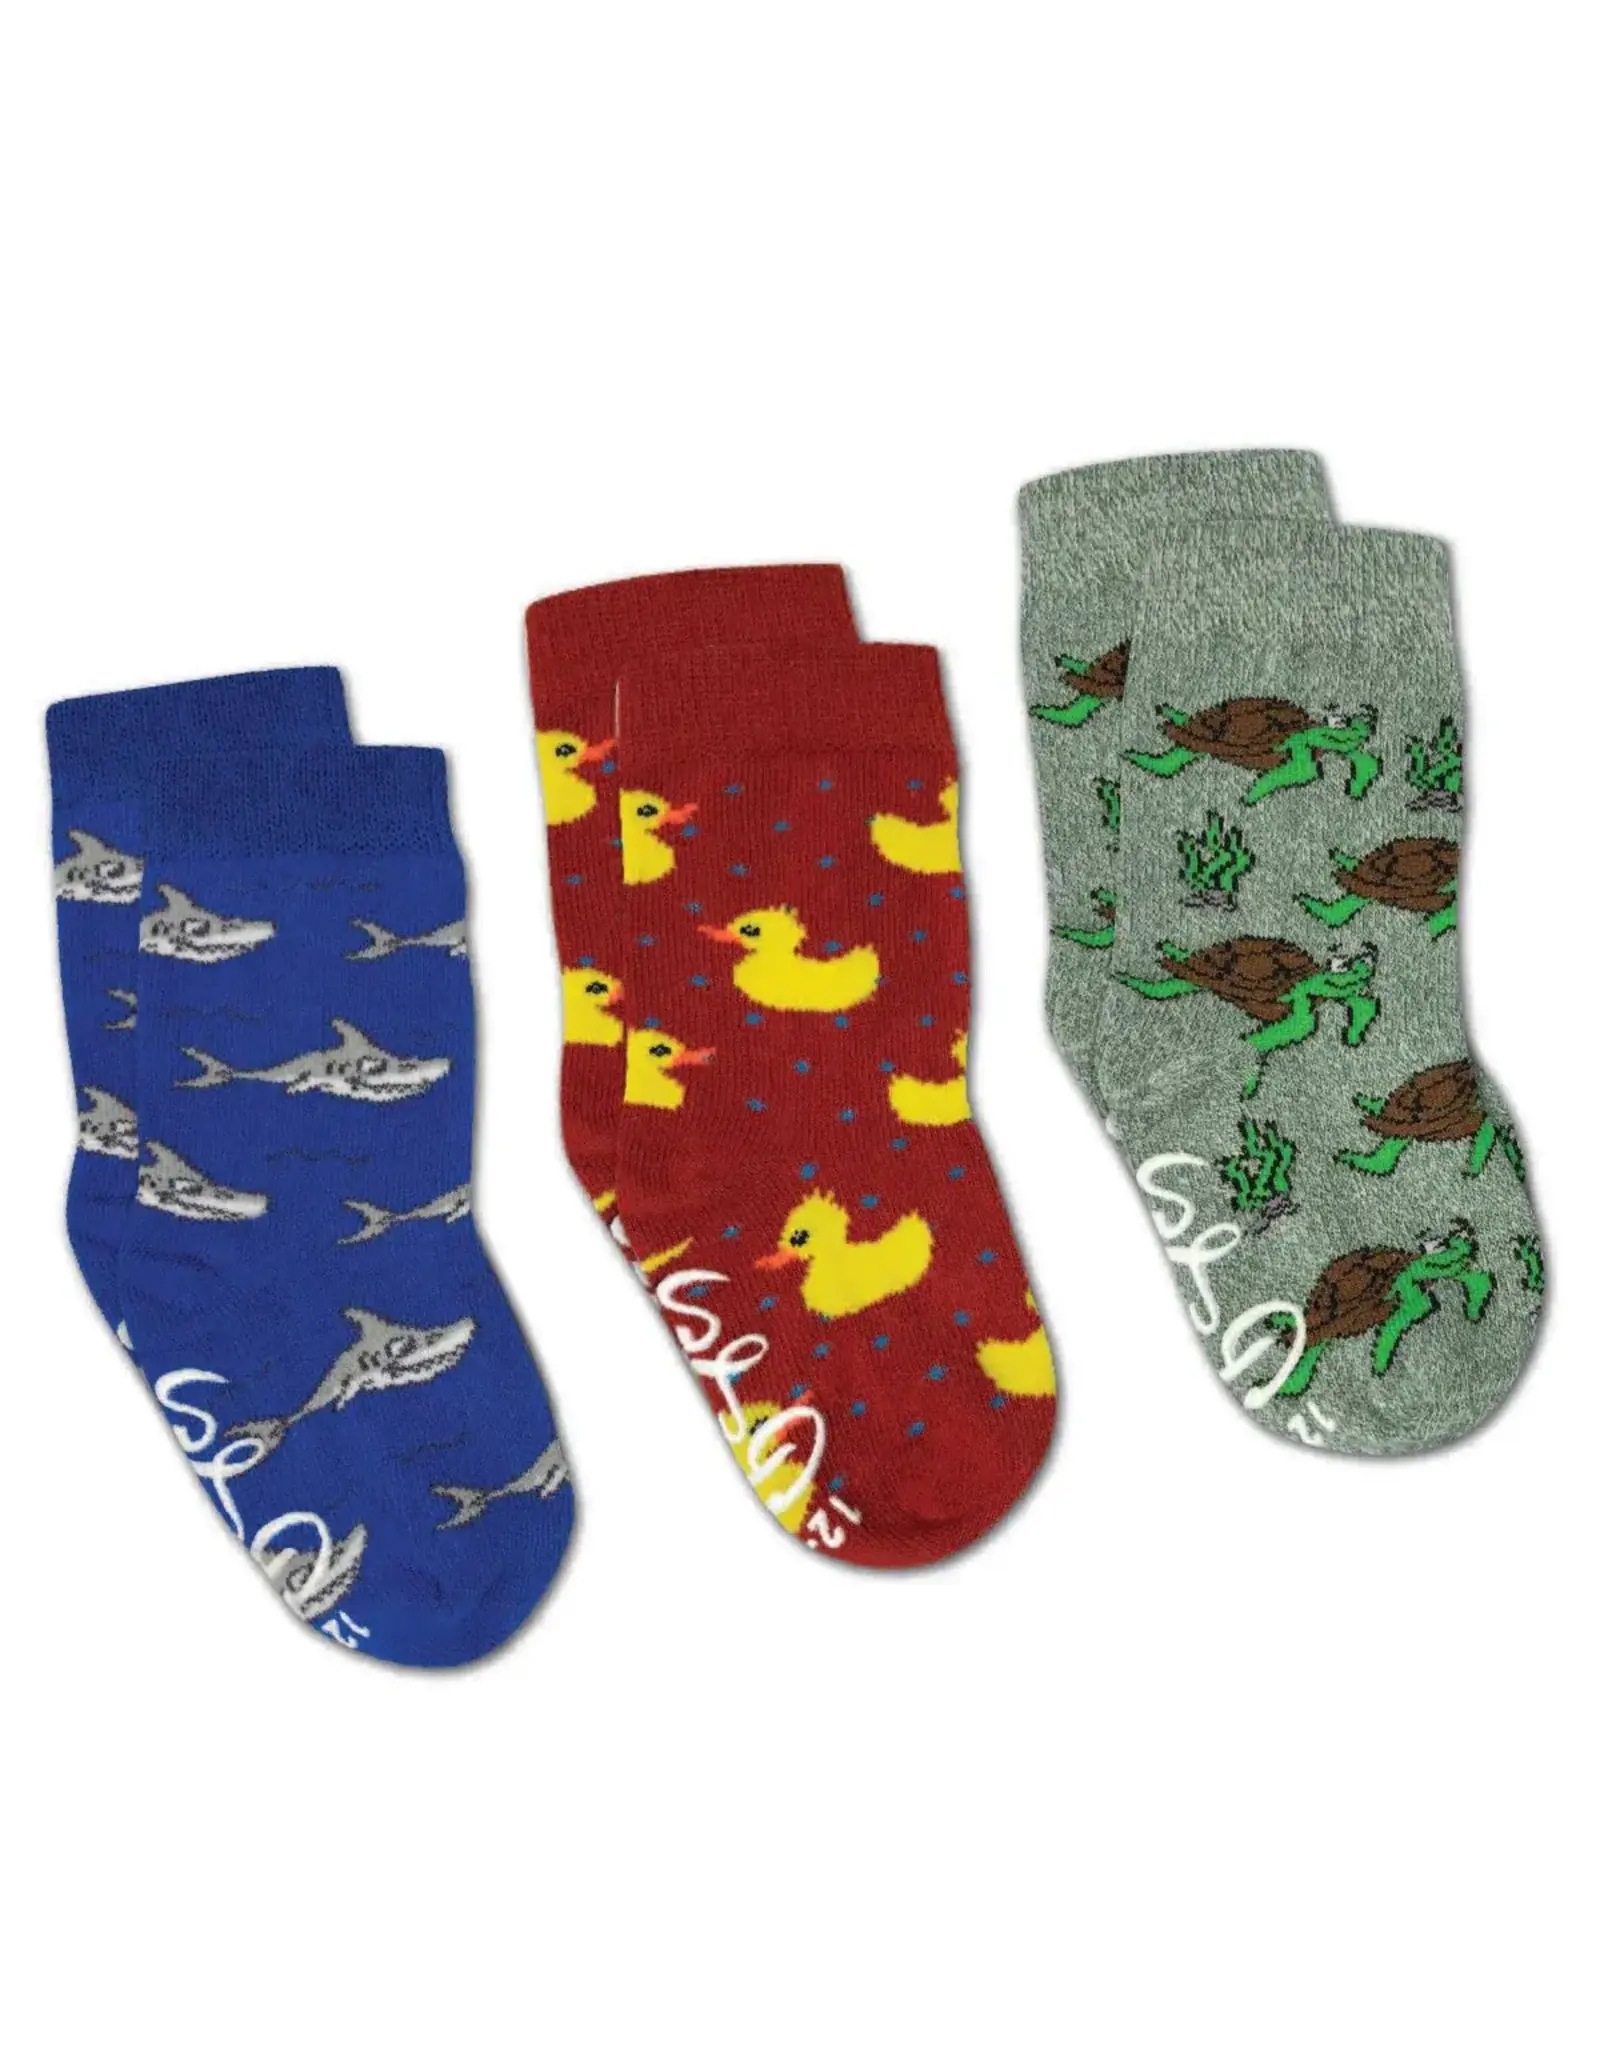 Rubber Ducks, Sharks, & Turtles Kids Socks - Size 2-4 Years